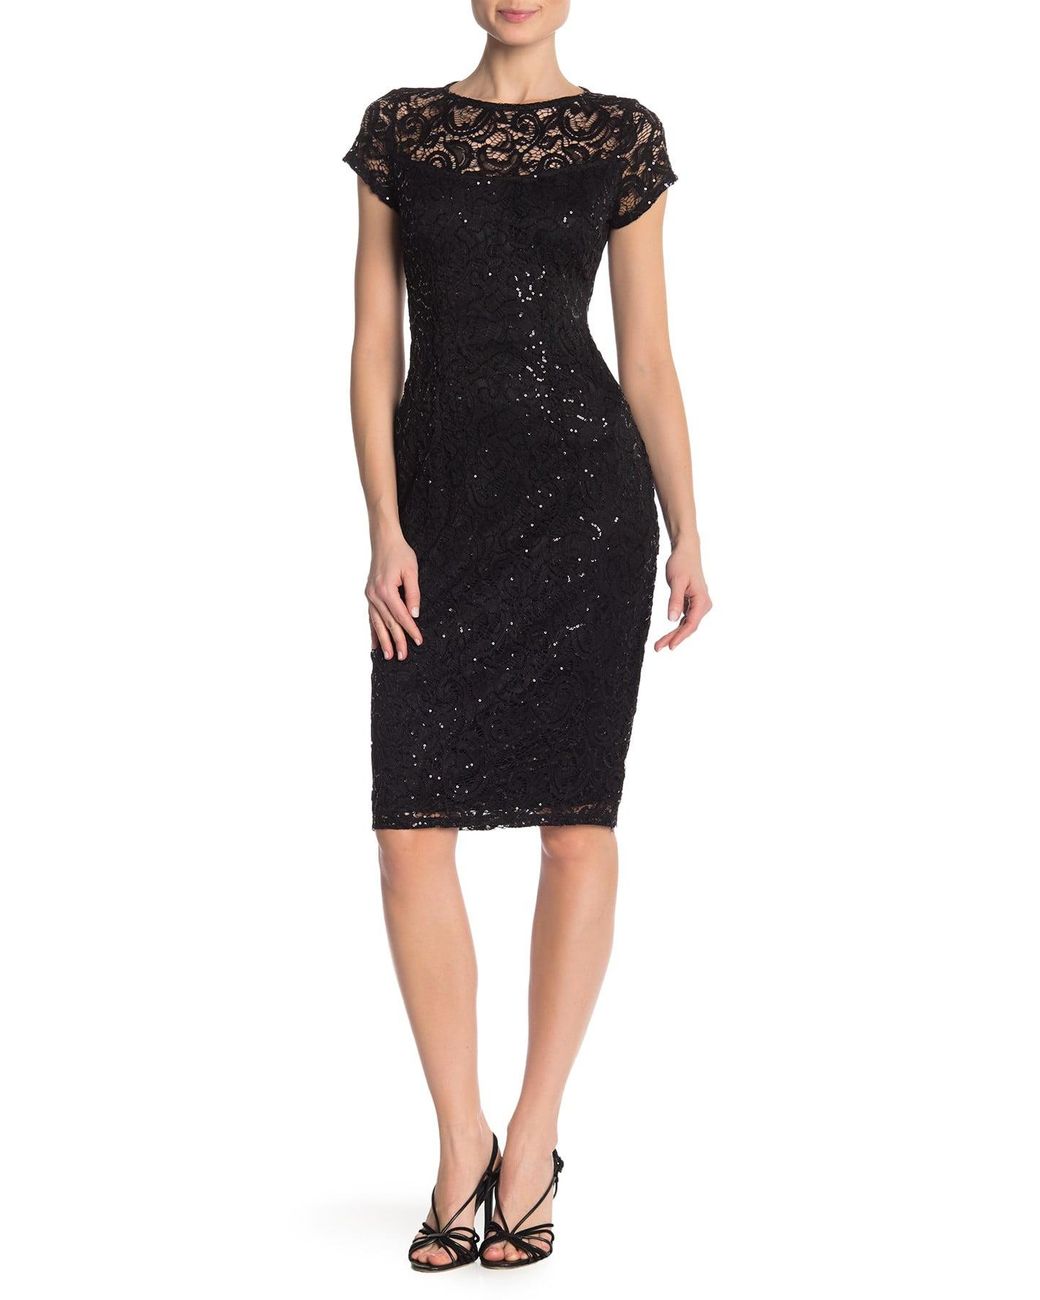 Marina Sequin Lace Cap Sleeve Sheath Dress in Black - Lyst